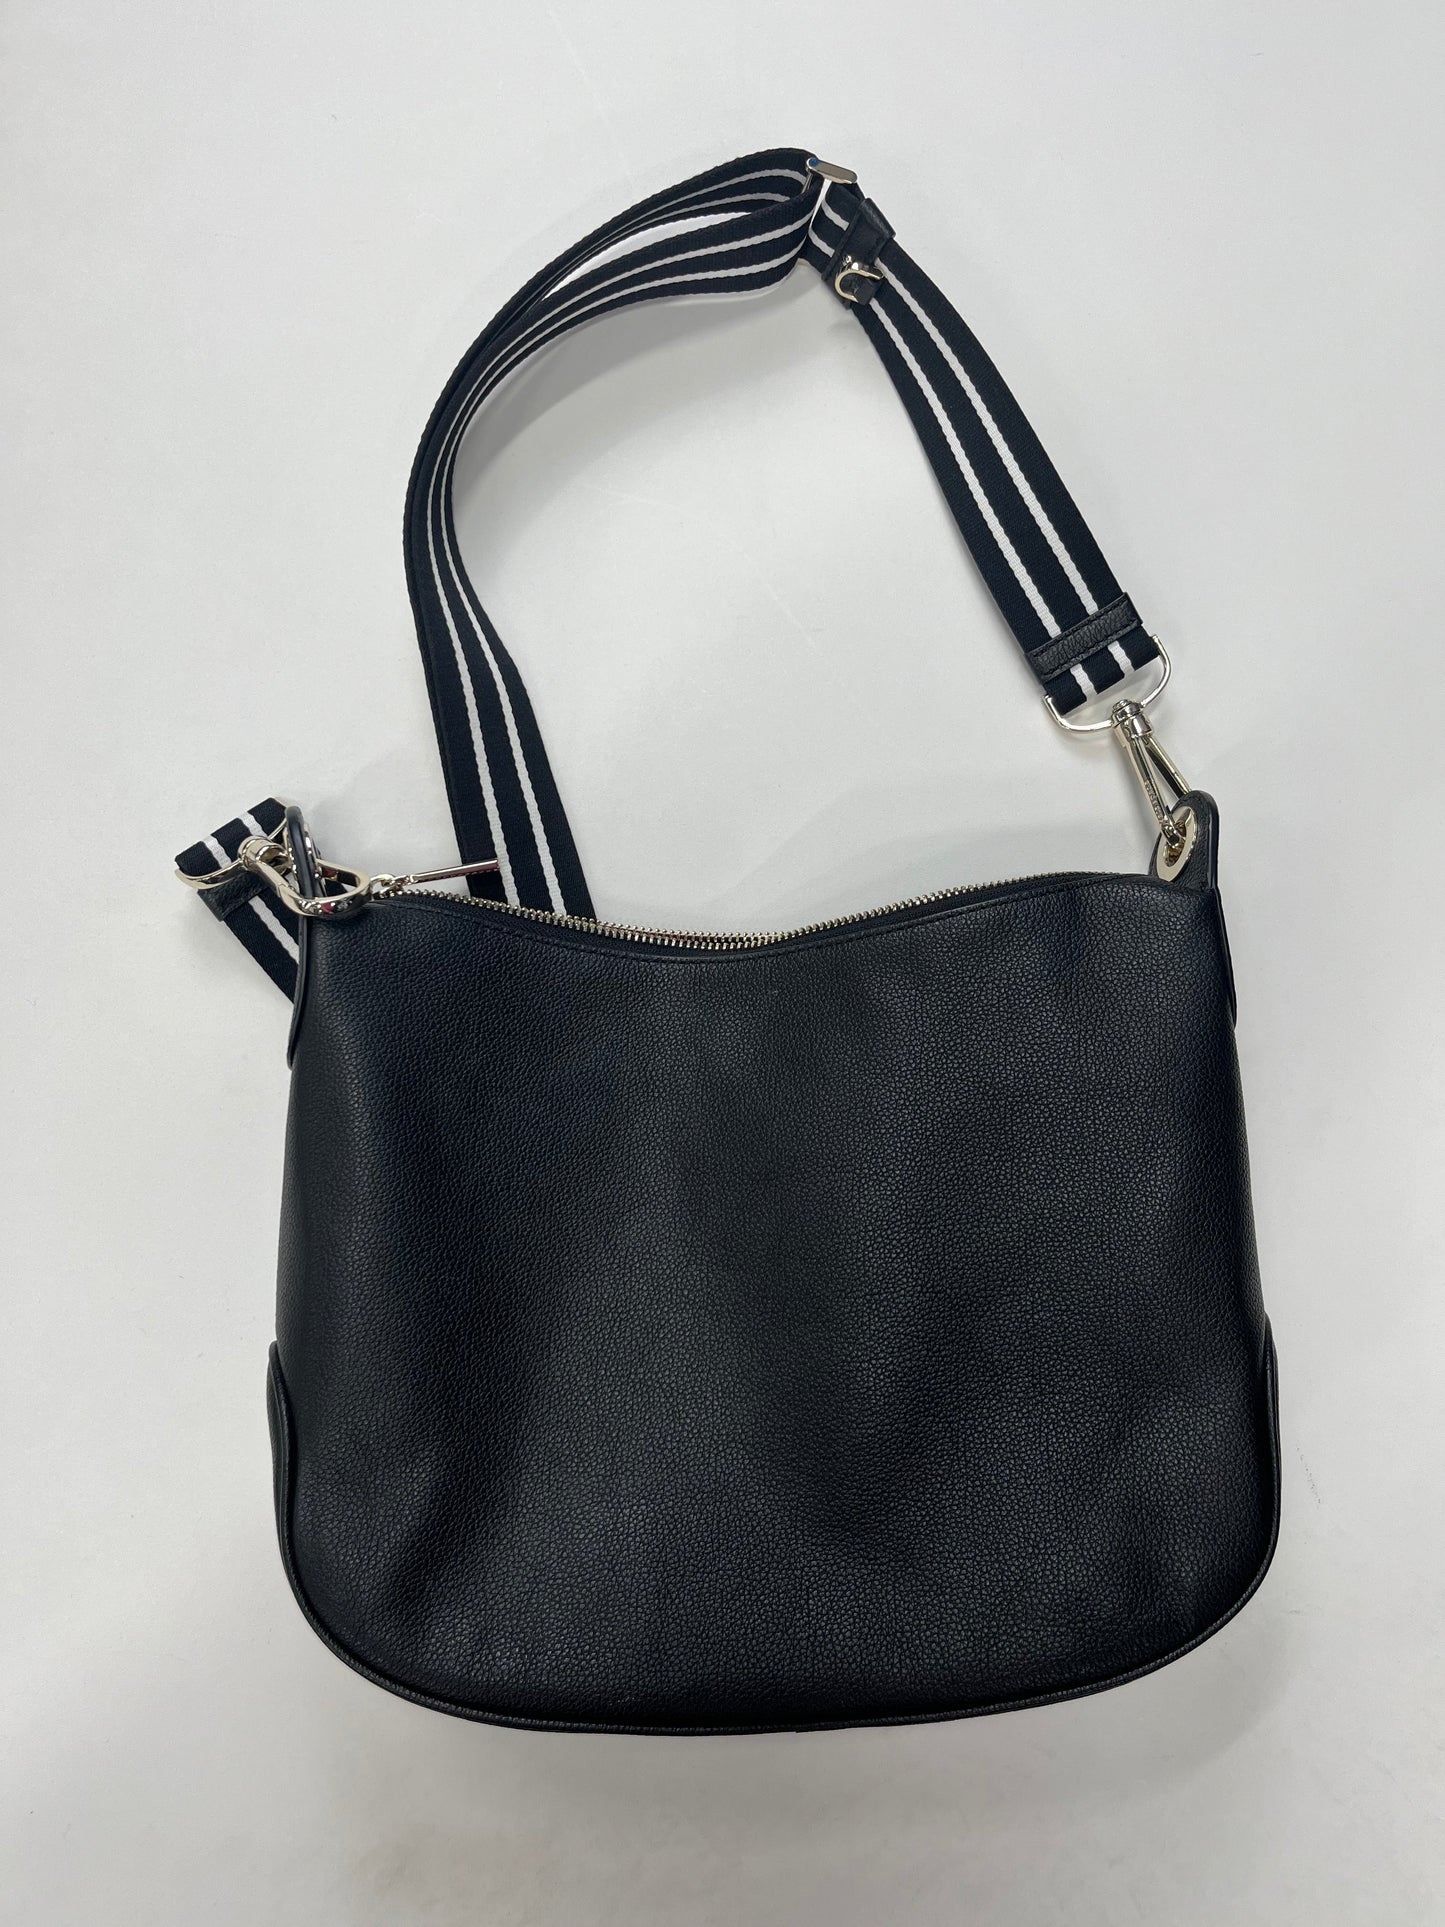 Black Handbag Leather Kate Spade, Size Medium